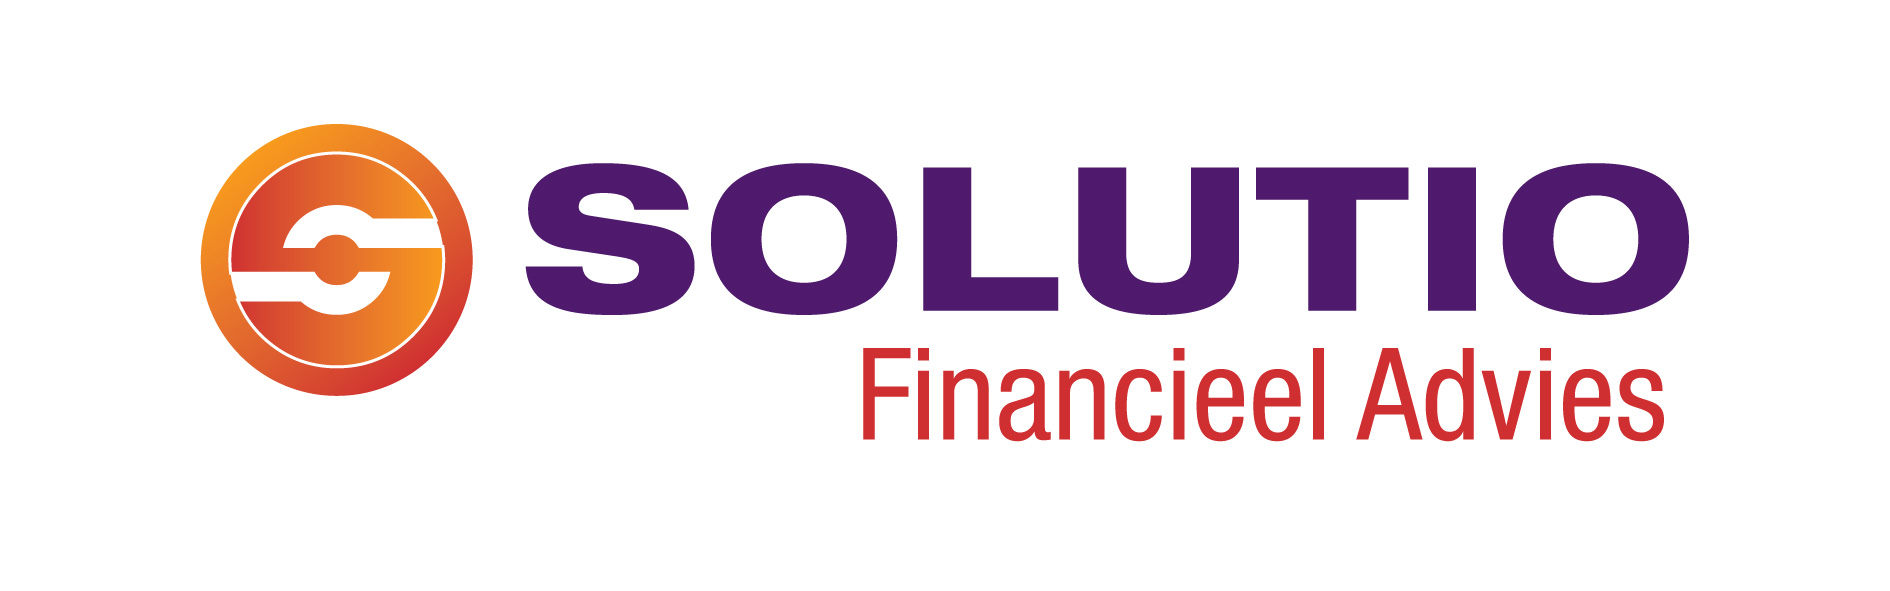 SOLUTIO Financieel Advies (logo)